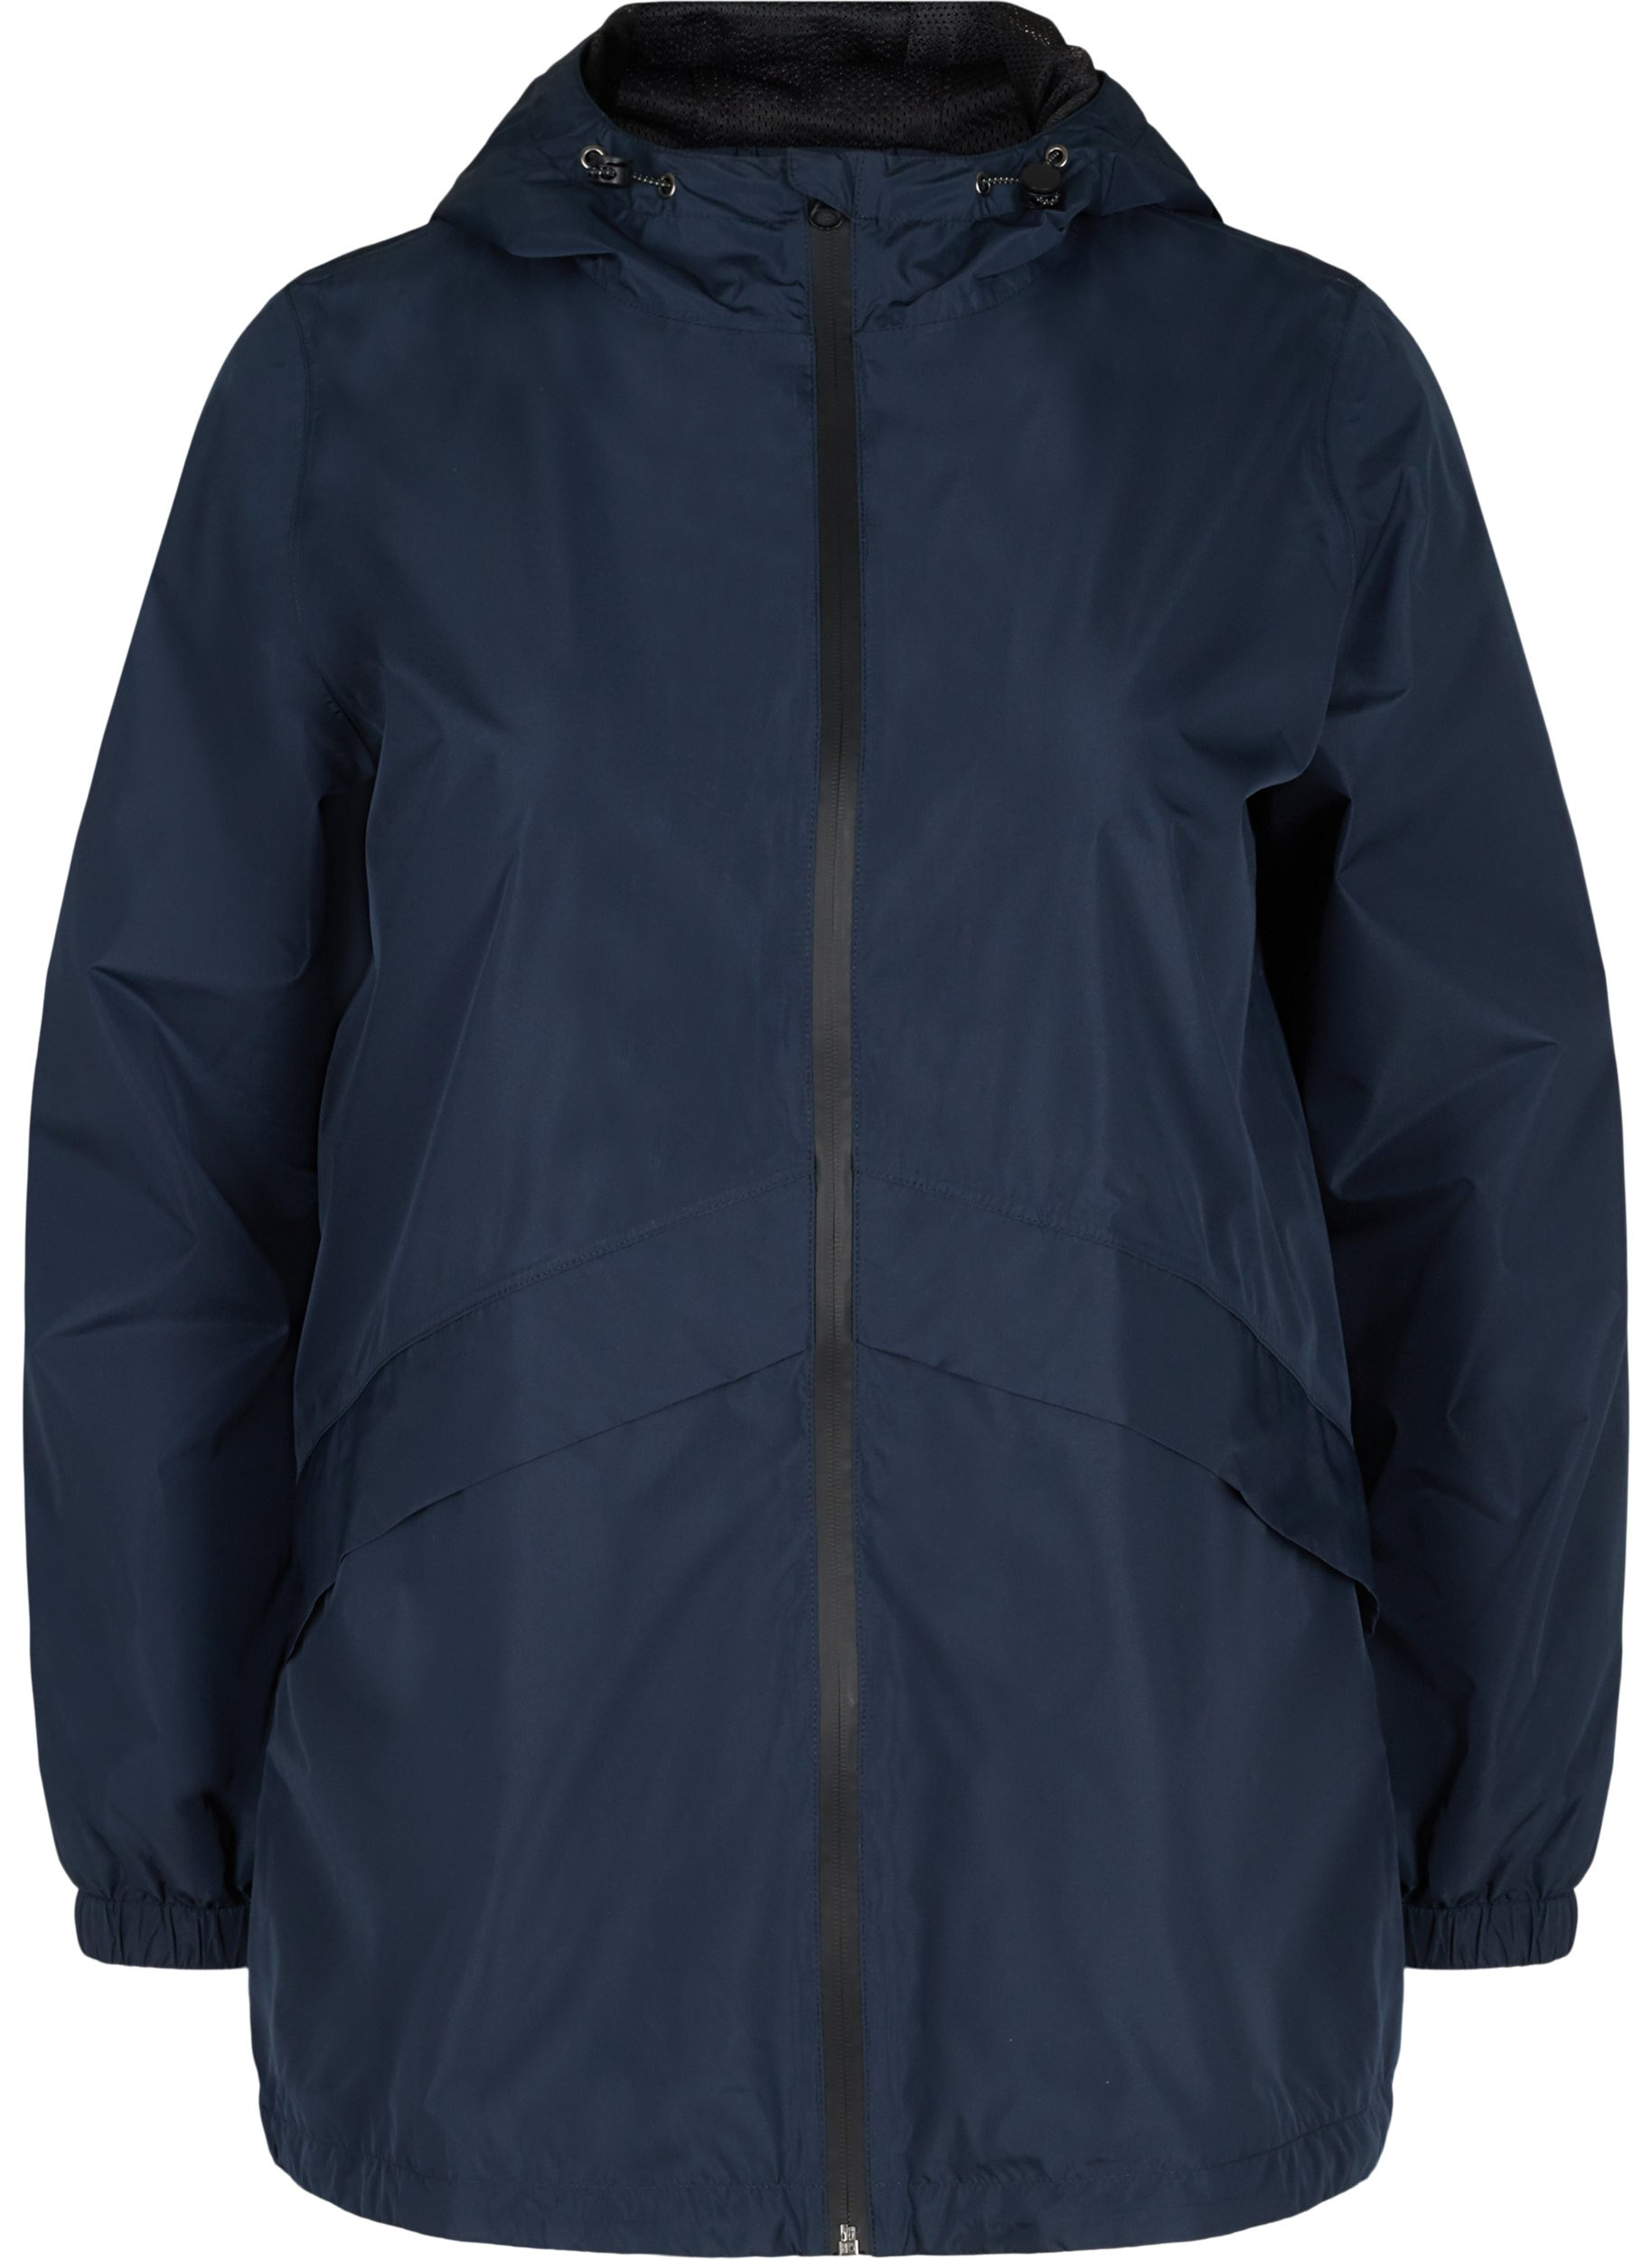 Rain jacket with adjustable bottom hem and hood, Navy Blazer, Packshot image number 0